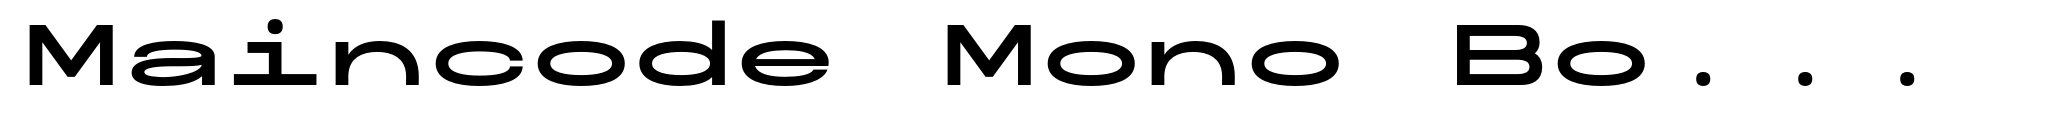 Maincode Mono Bold 200 image